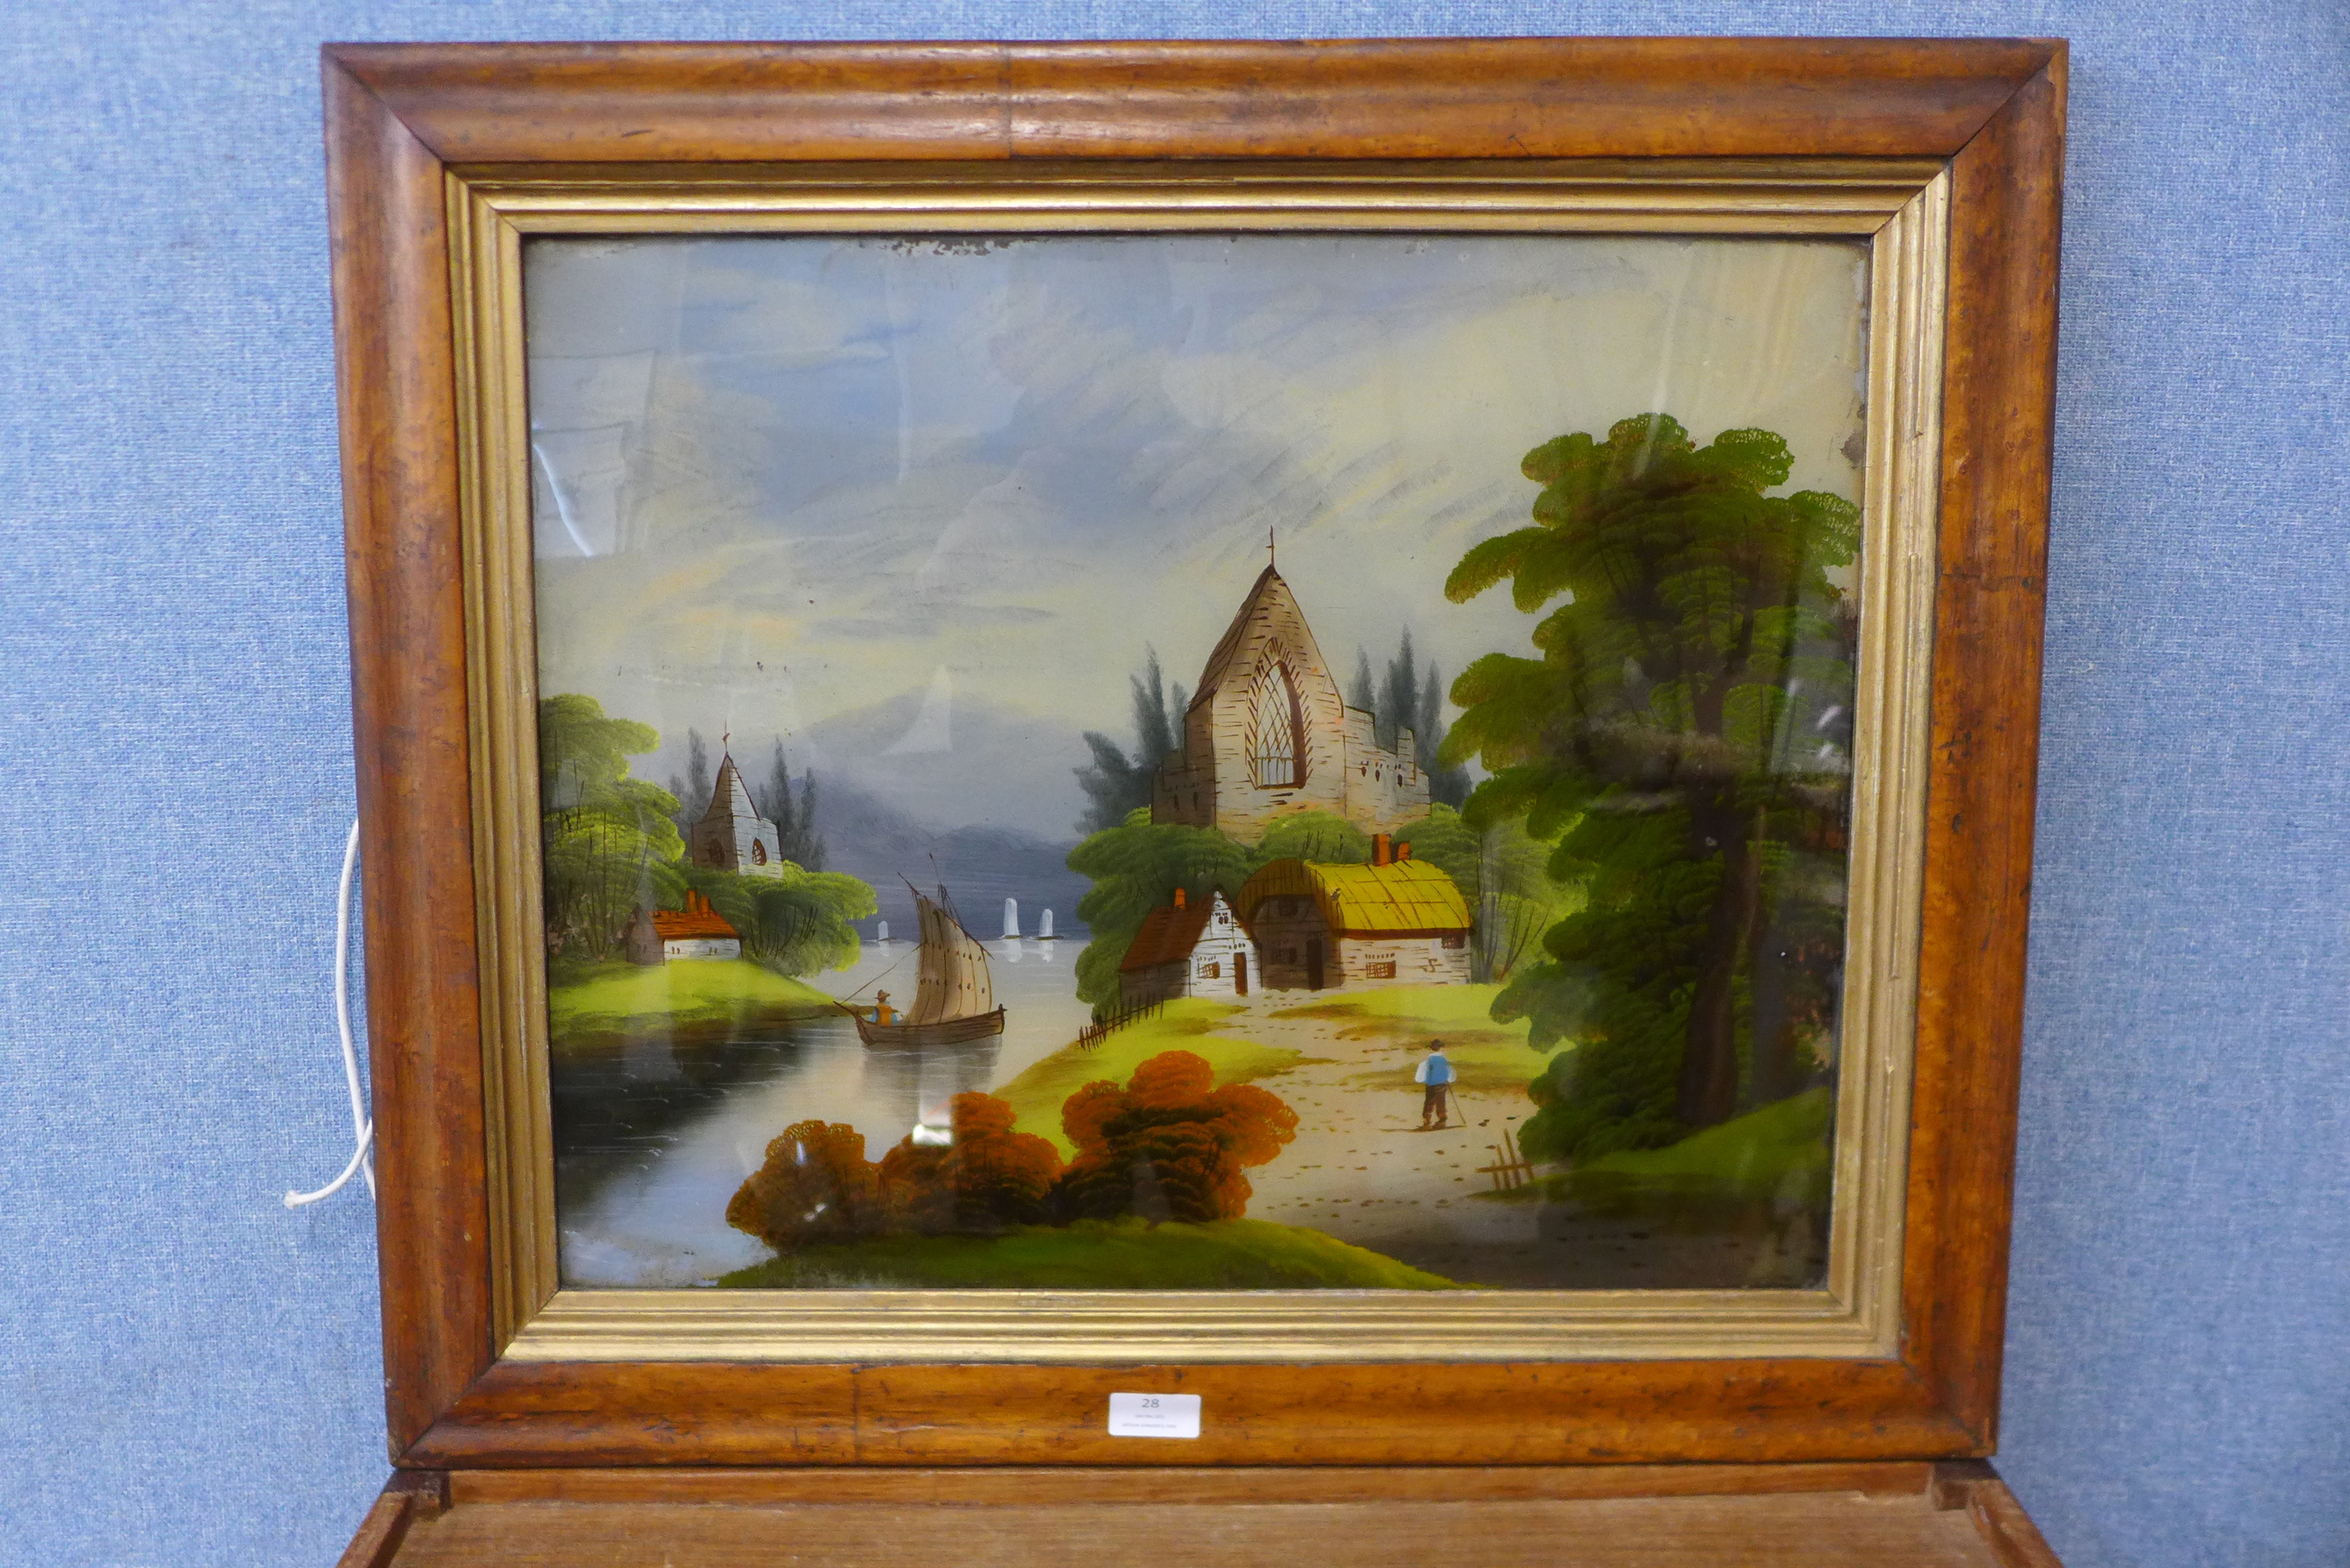 English School (19th Century), river scene, reverse oil painting on glass, framed